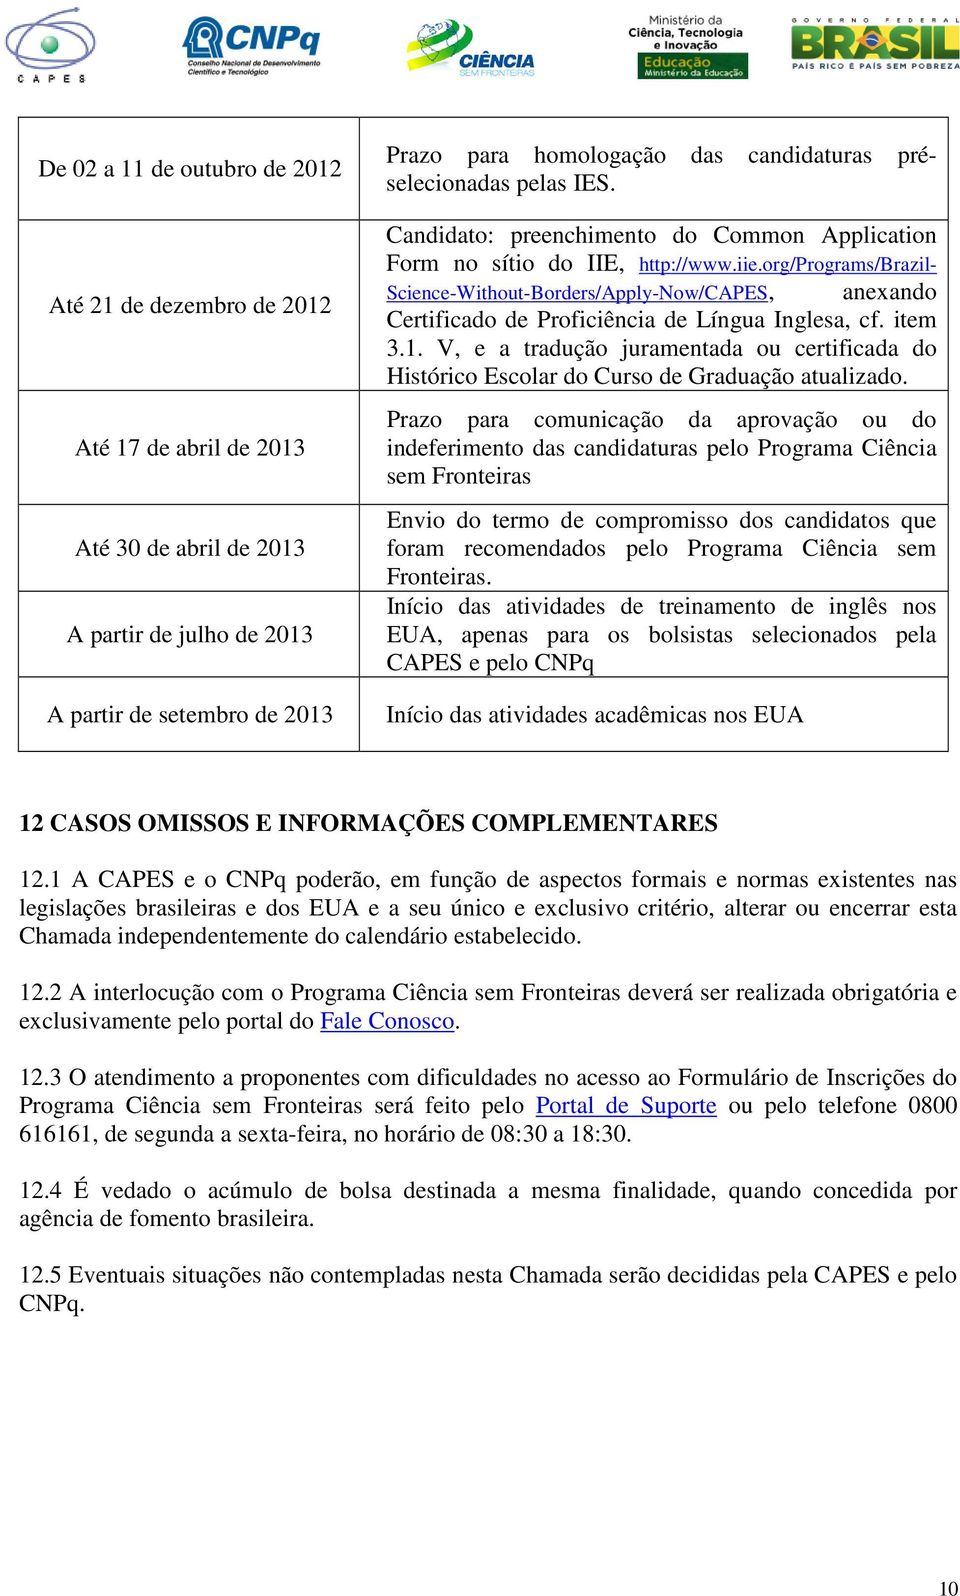 org/programs/brazil- Science-Without-Borders/Apply-Now/CAPES, anexando Certificado de Proficiência de Língua Inglesa, cf. item 3.1.